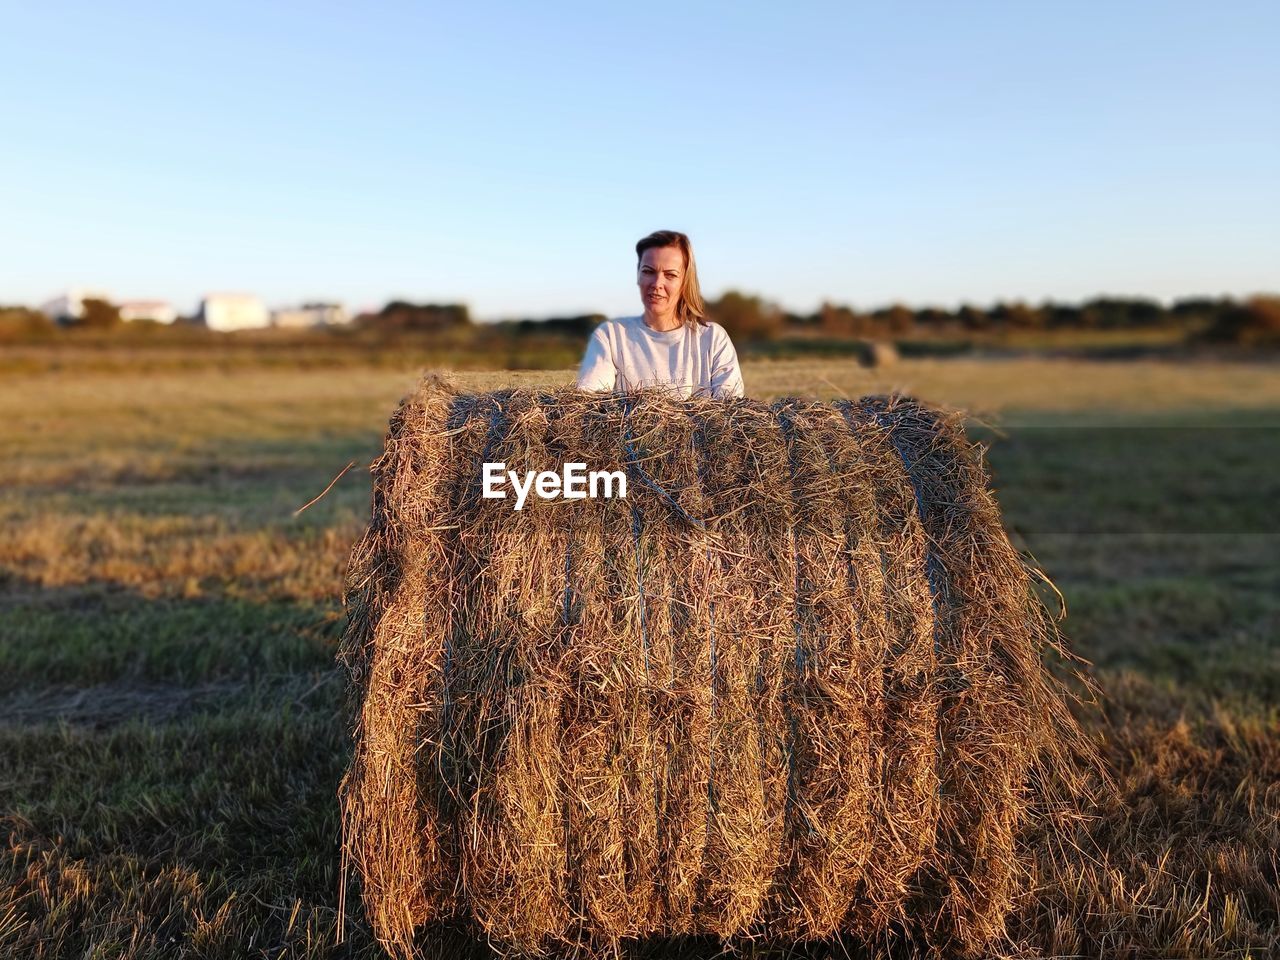 Man standing on hay